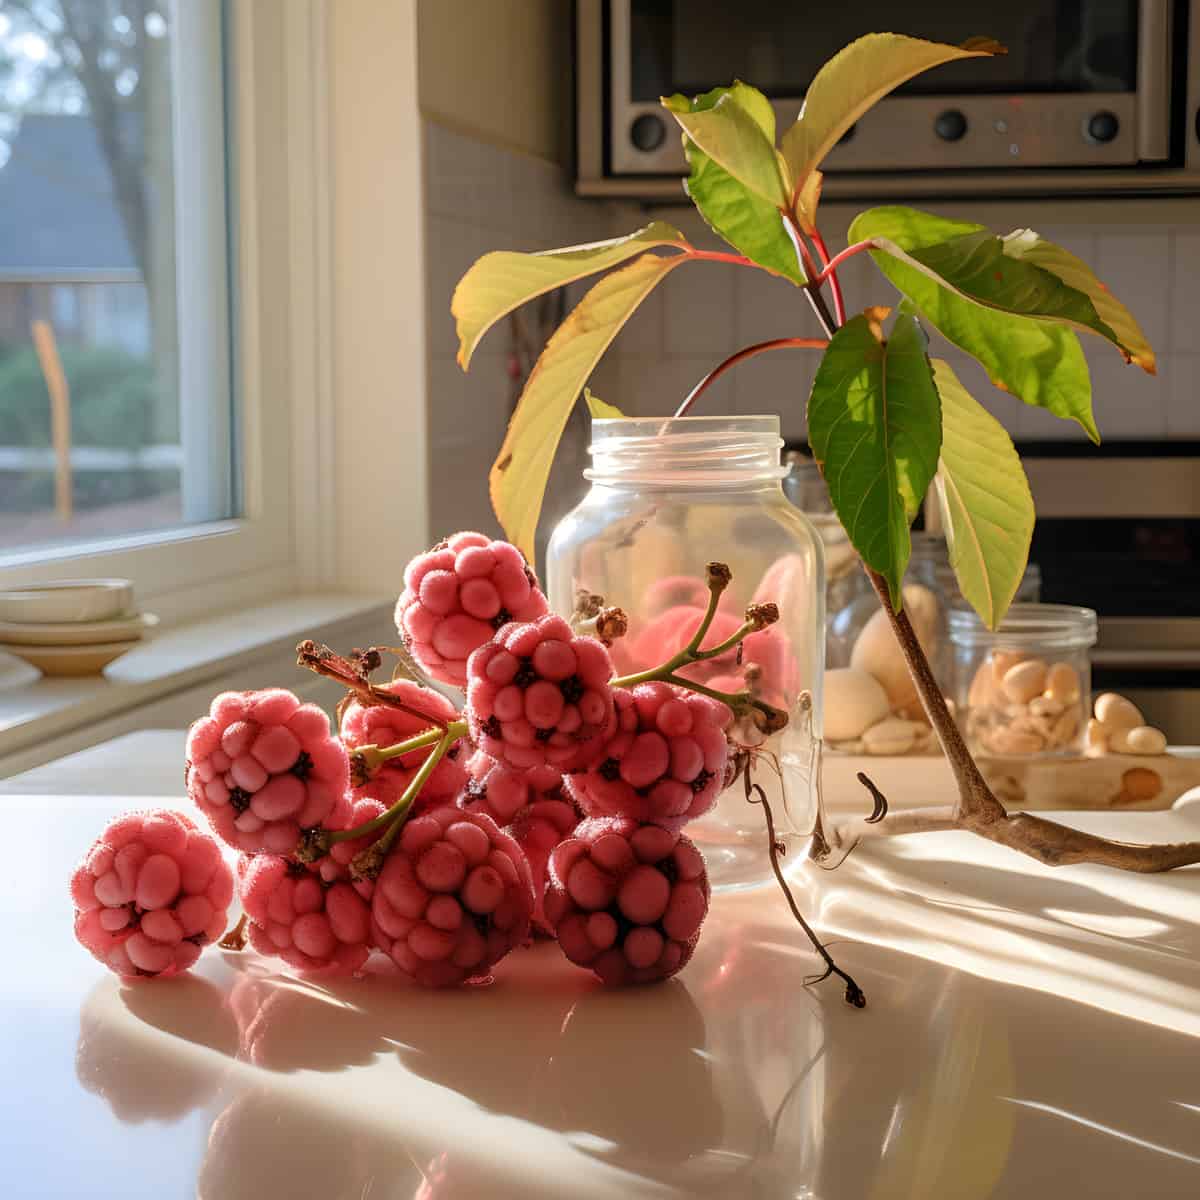 Kousa Dogwood Fruit on a kitchen counter